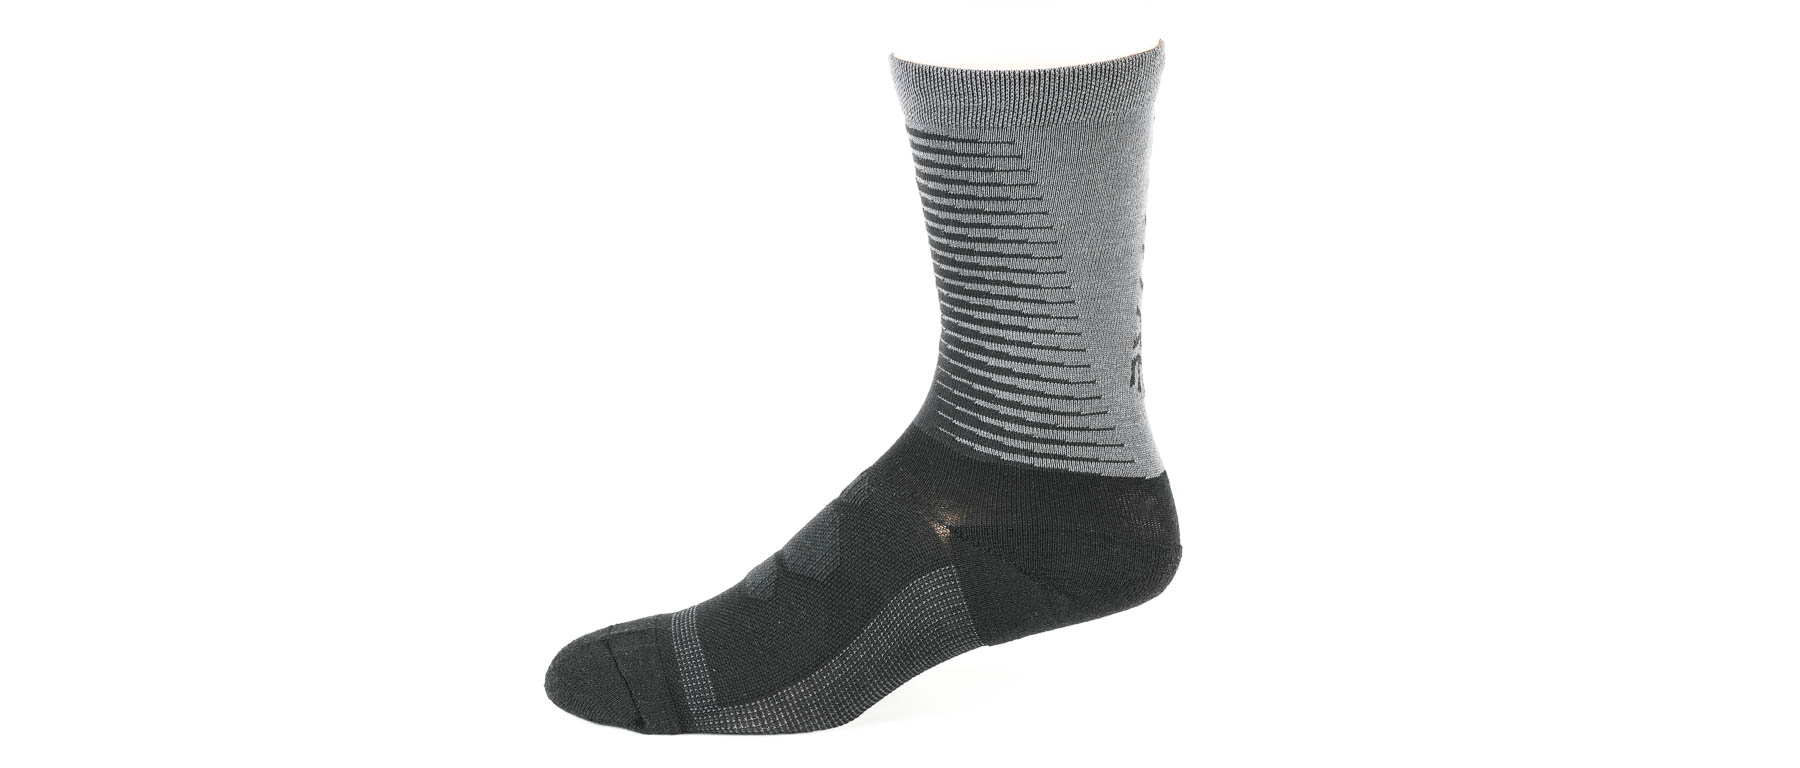 Shimano S-Phyre Merino Tall Socks